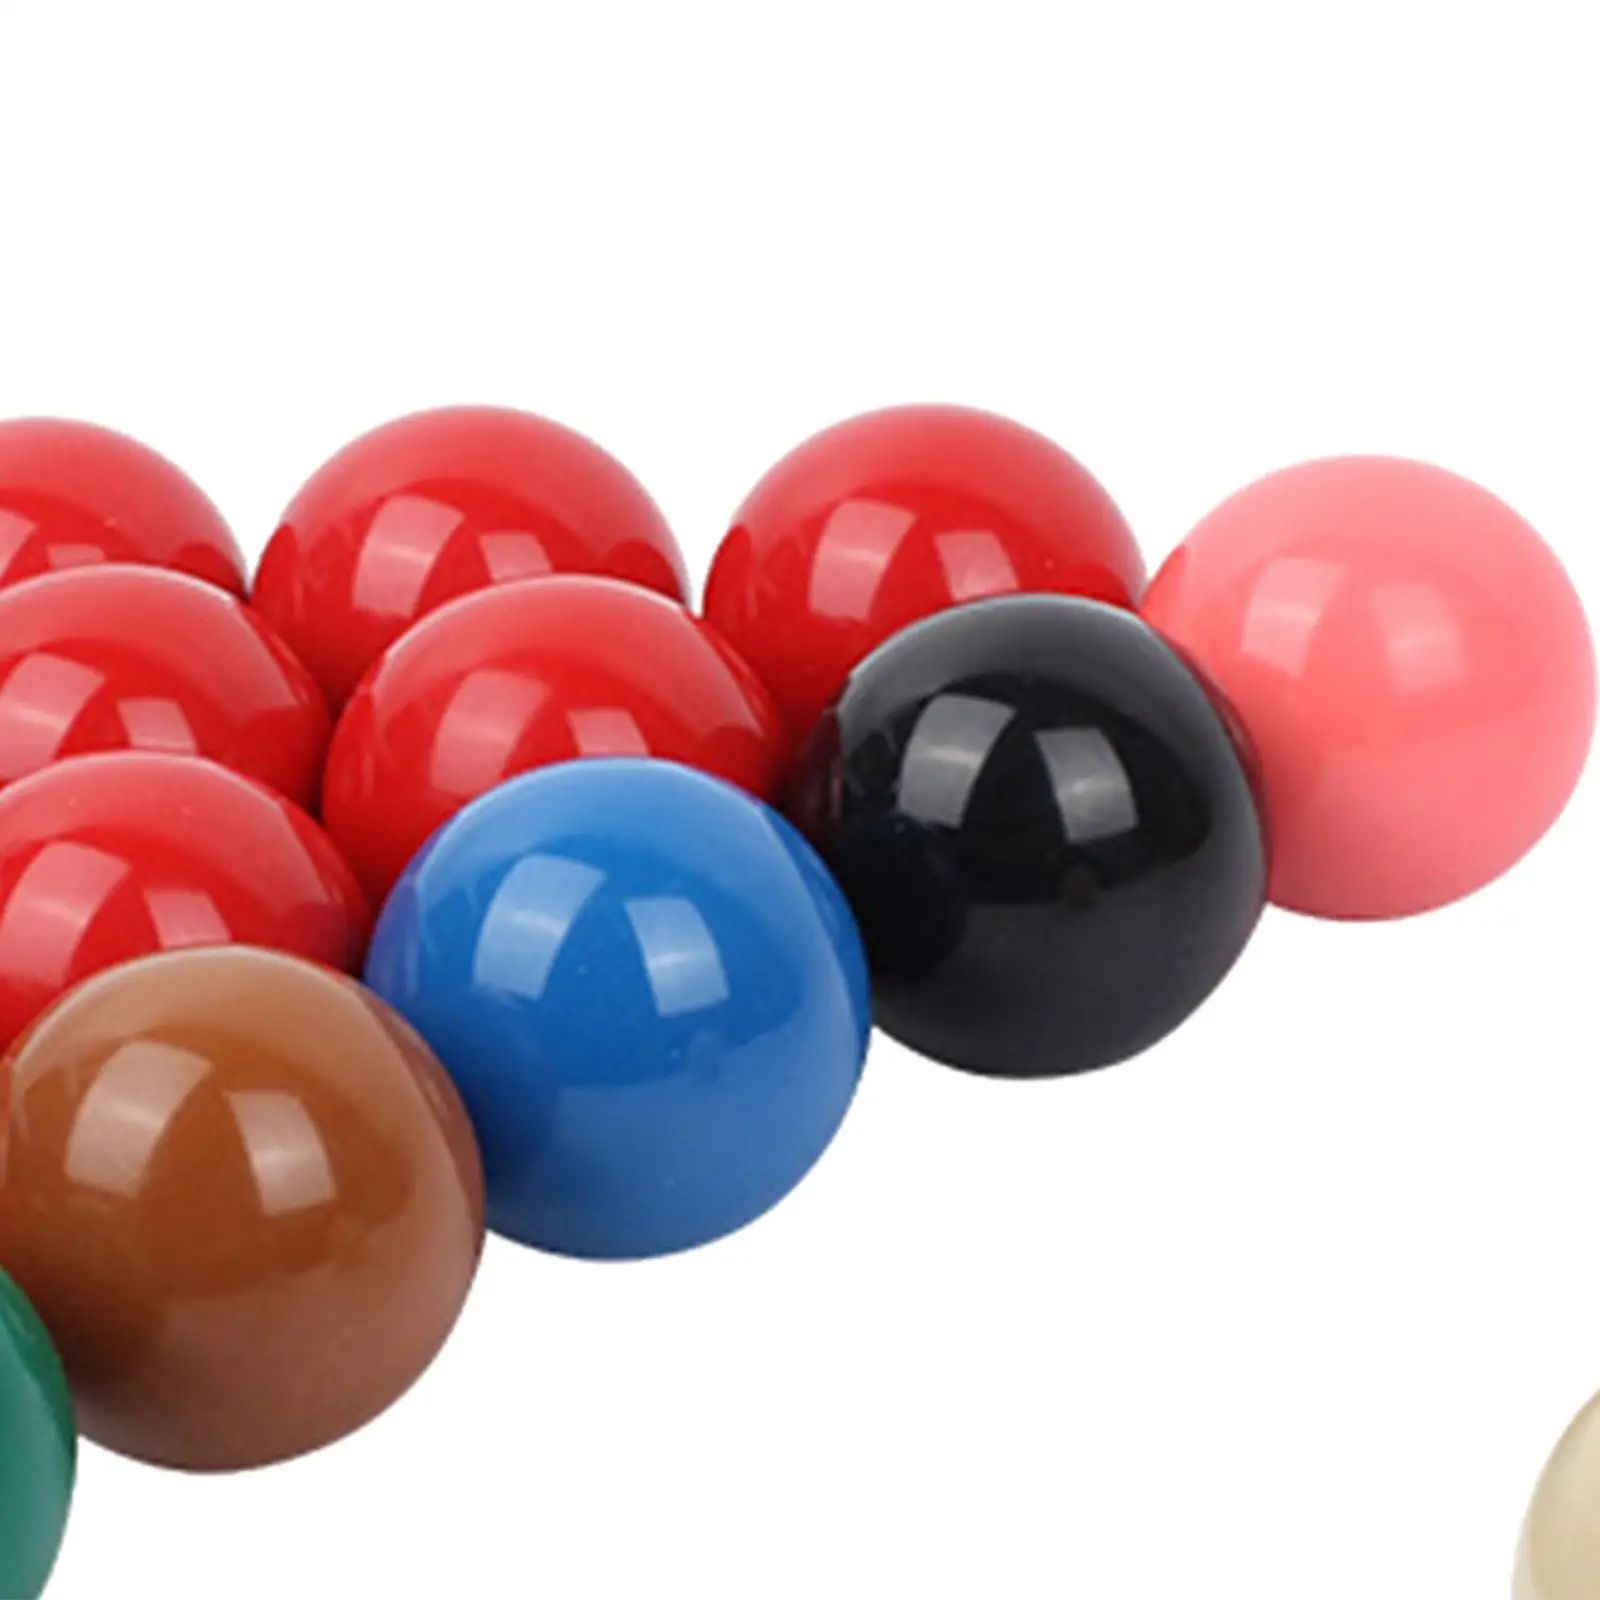 22x Billiard Balls Colorful Pool Table Balls Snooker & Billiard Accessories